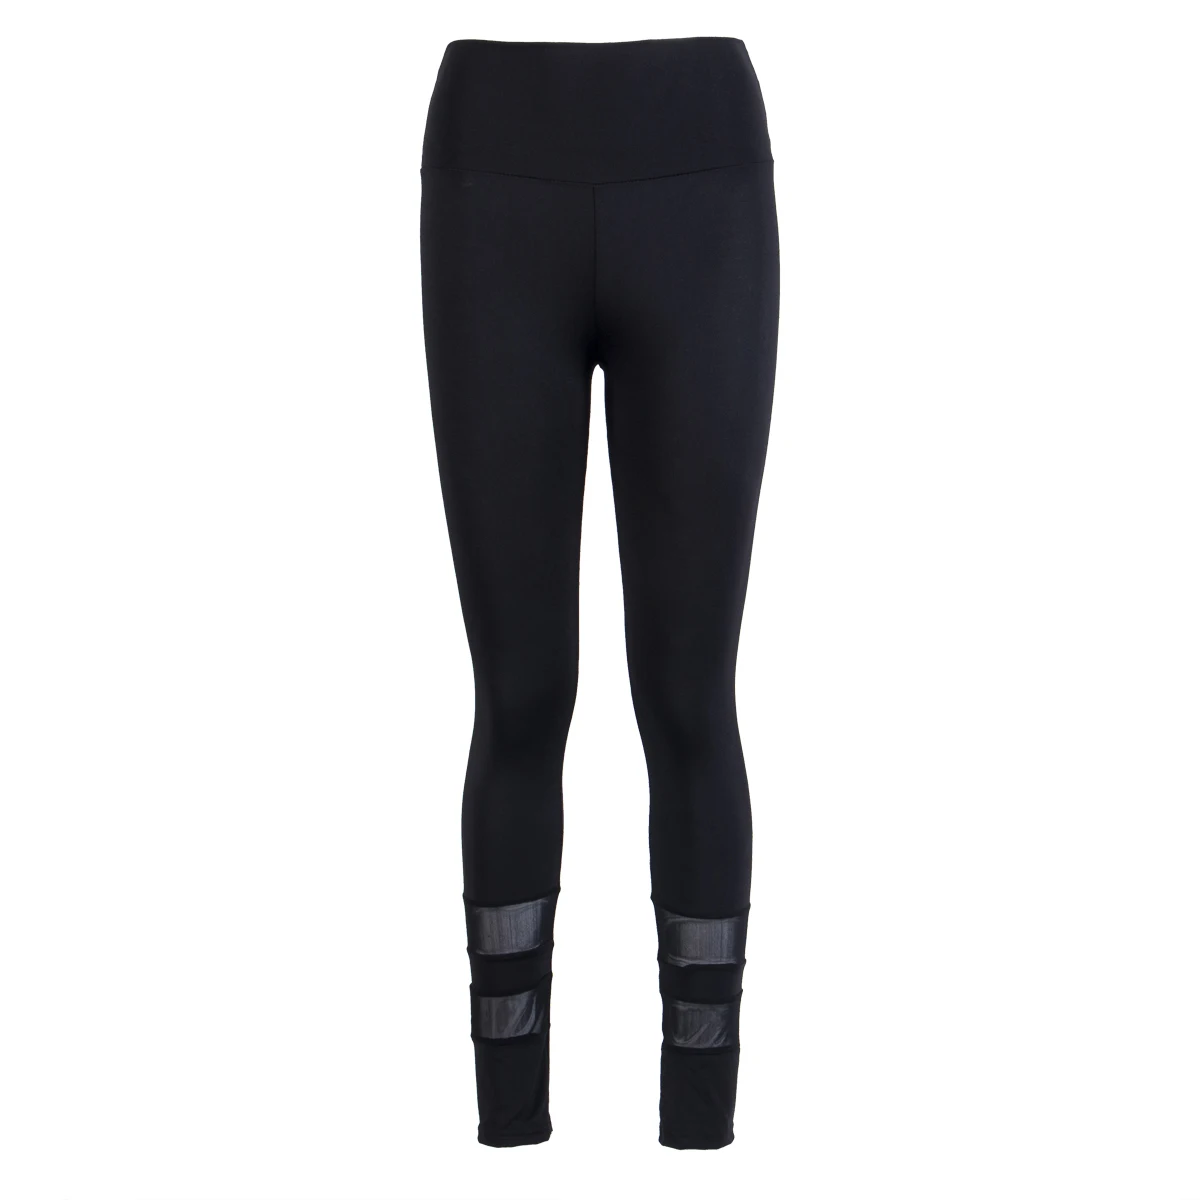 black leggings Fashion New Women High Waist Stretch Leggings Fitness Pants Athletic Gym Sport Trousers S-XL compression leggings Leggings